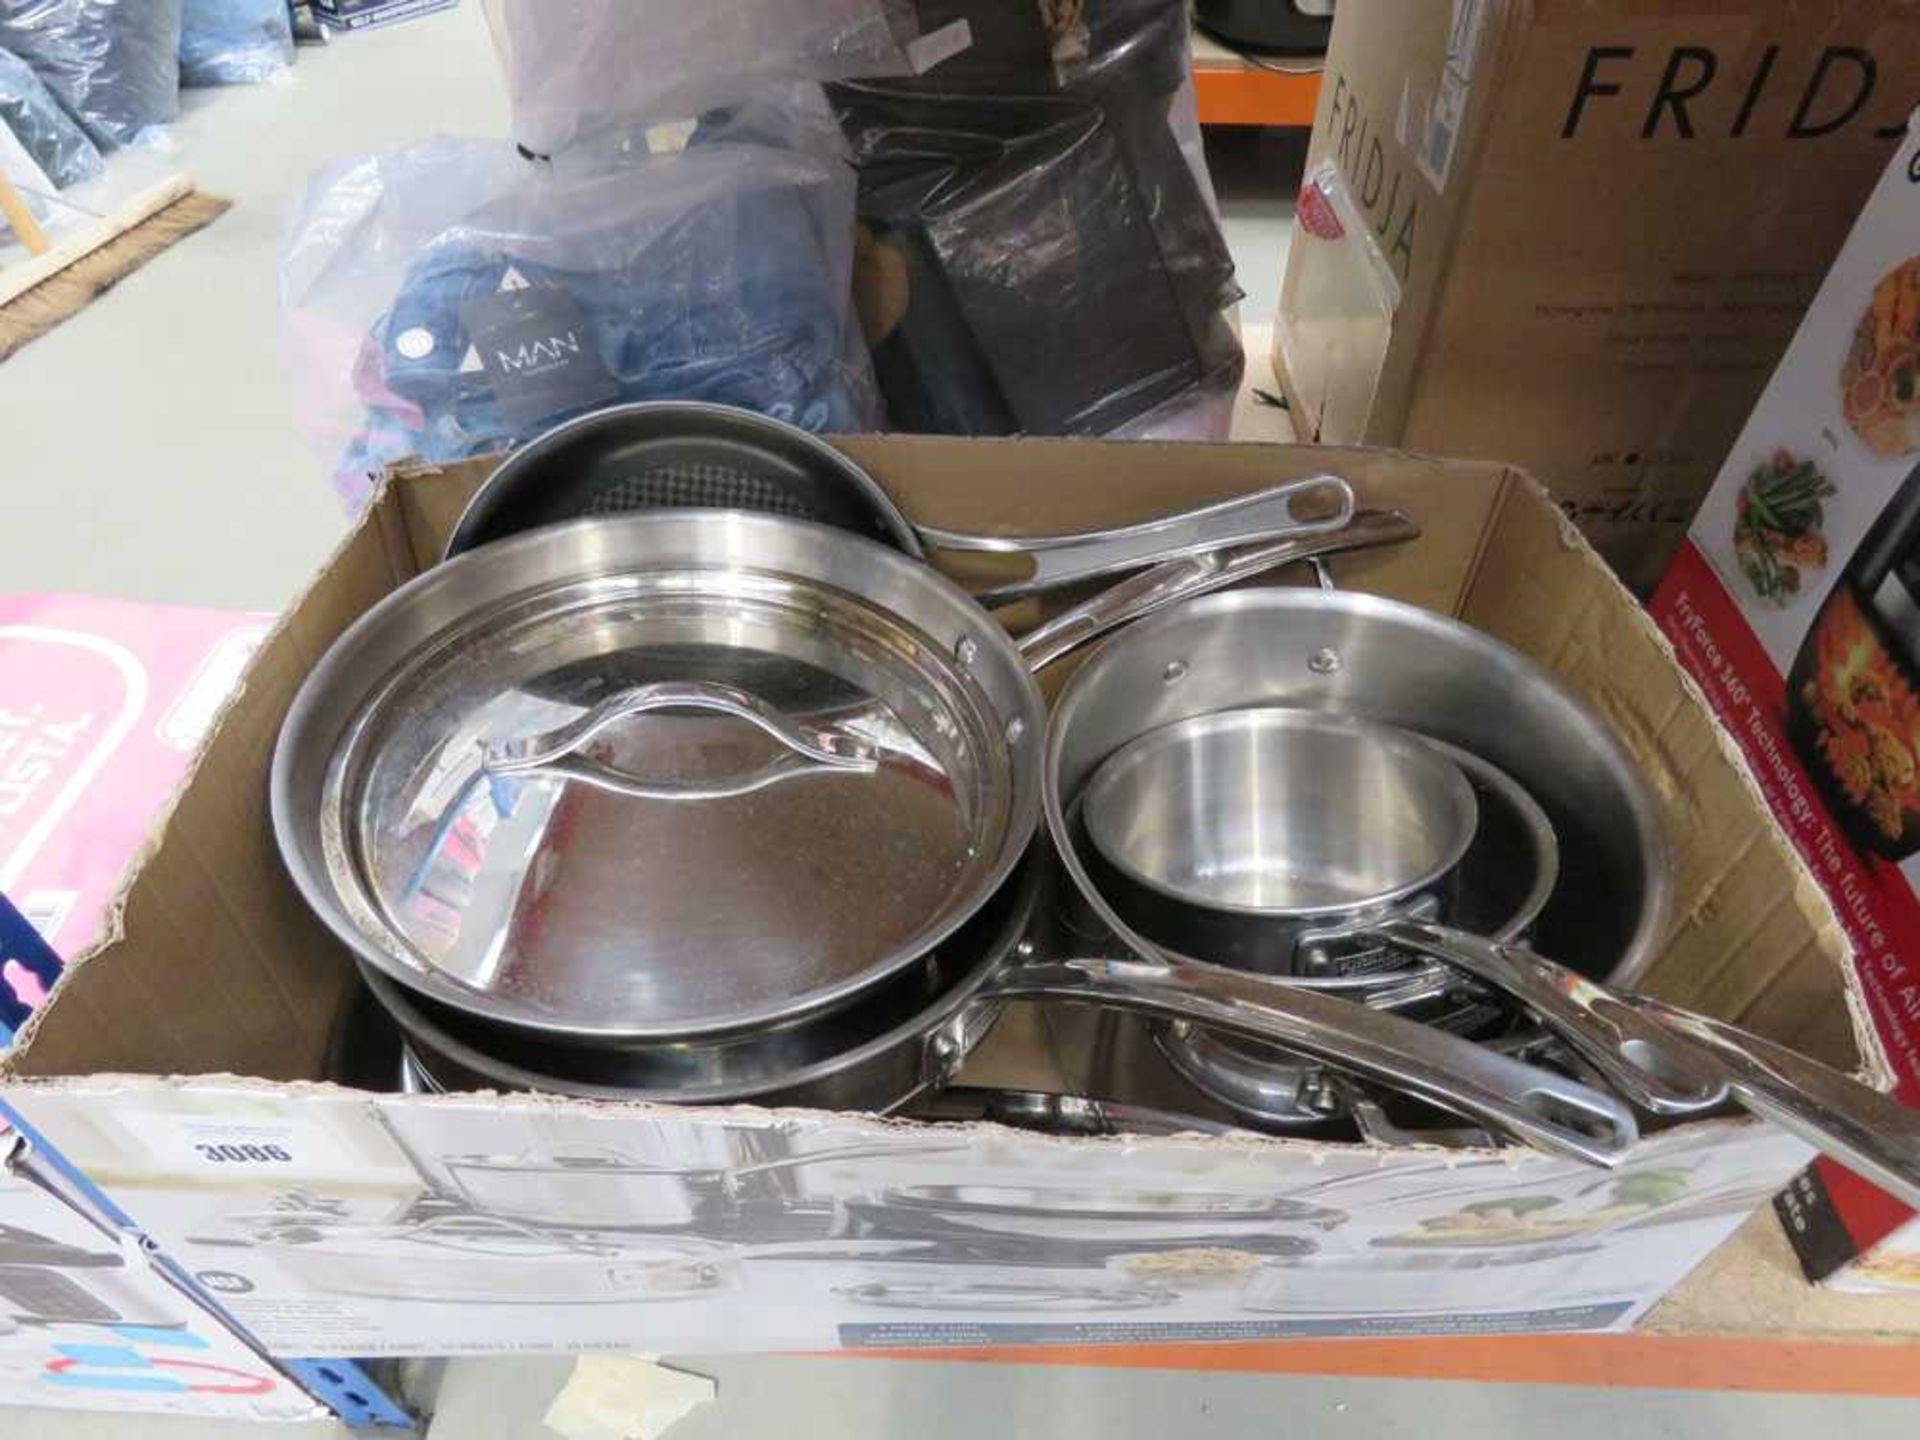 +VAT Kirkland stainless steel cookware set in box